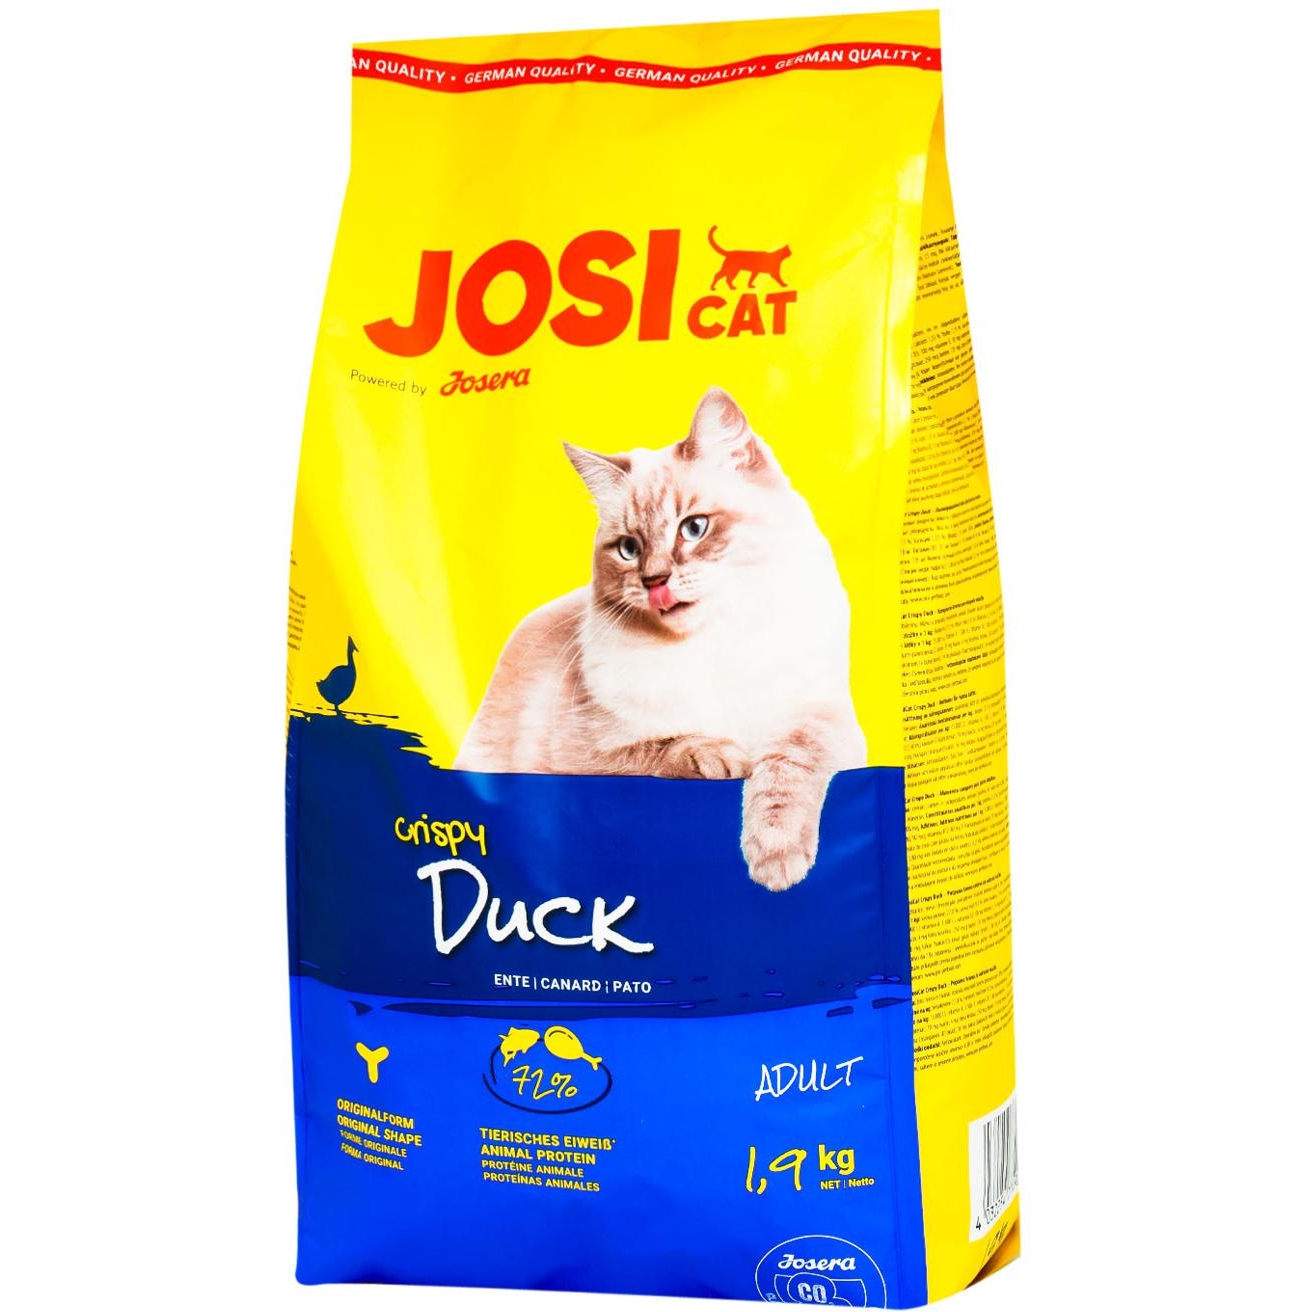 Сухой корм для кошек Josera JosiCat Crispy Duck 1.9 кг - фото 1